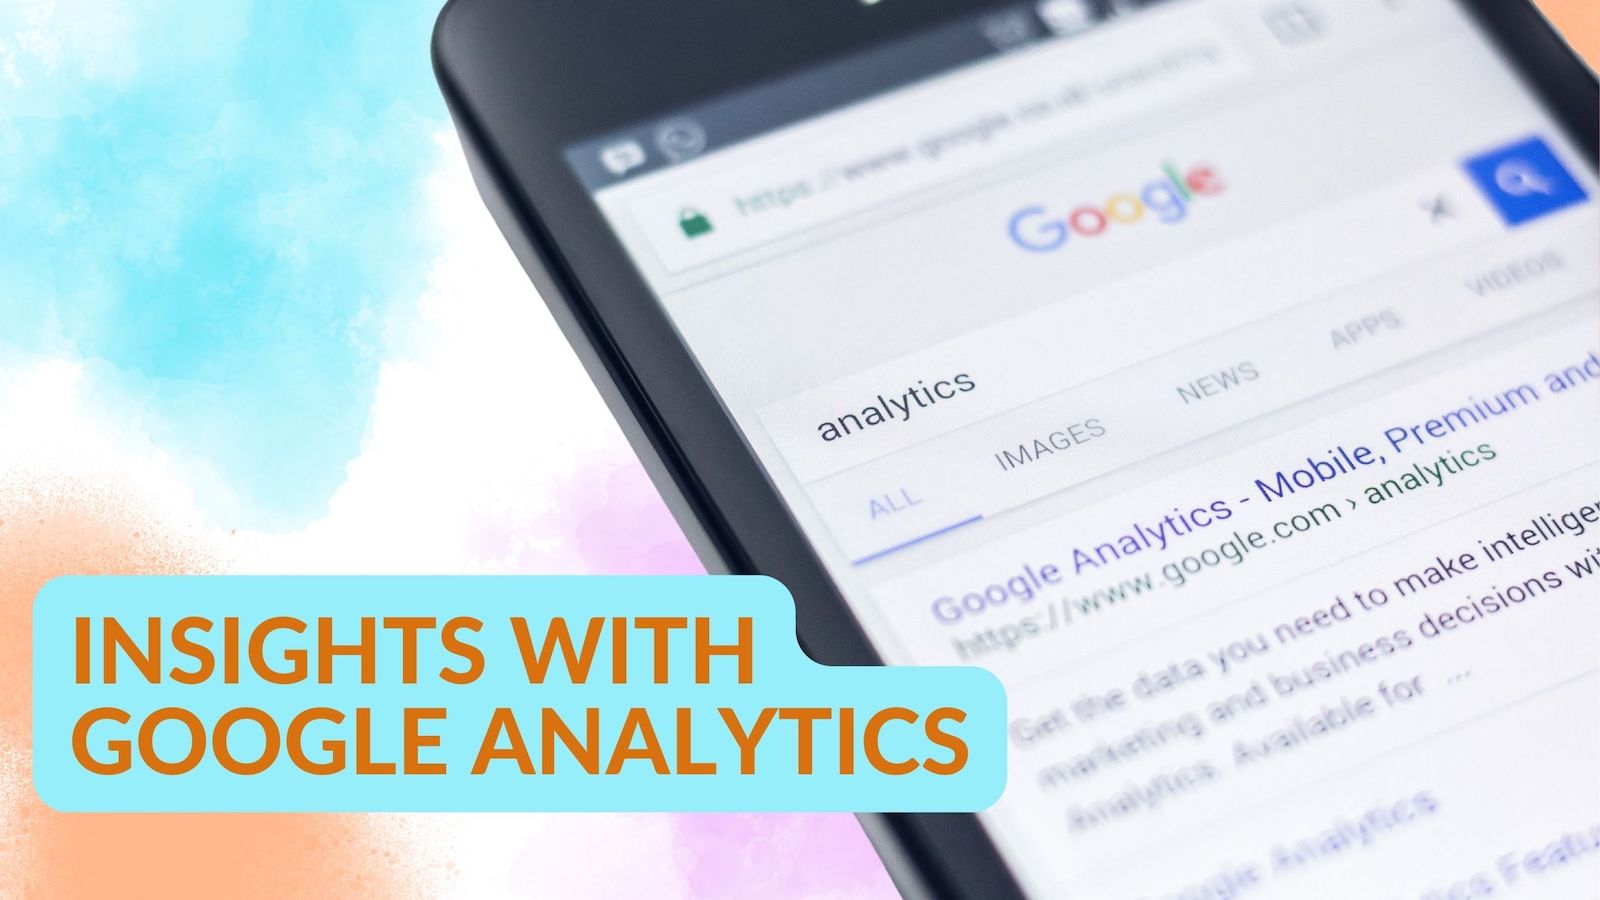 google analytics gives insight on google business